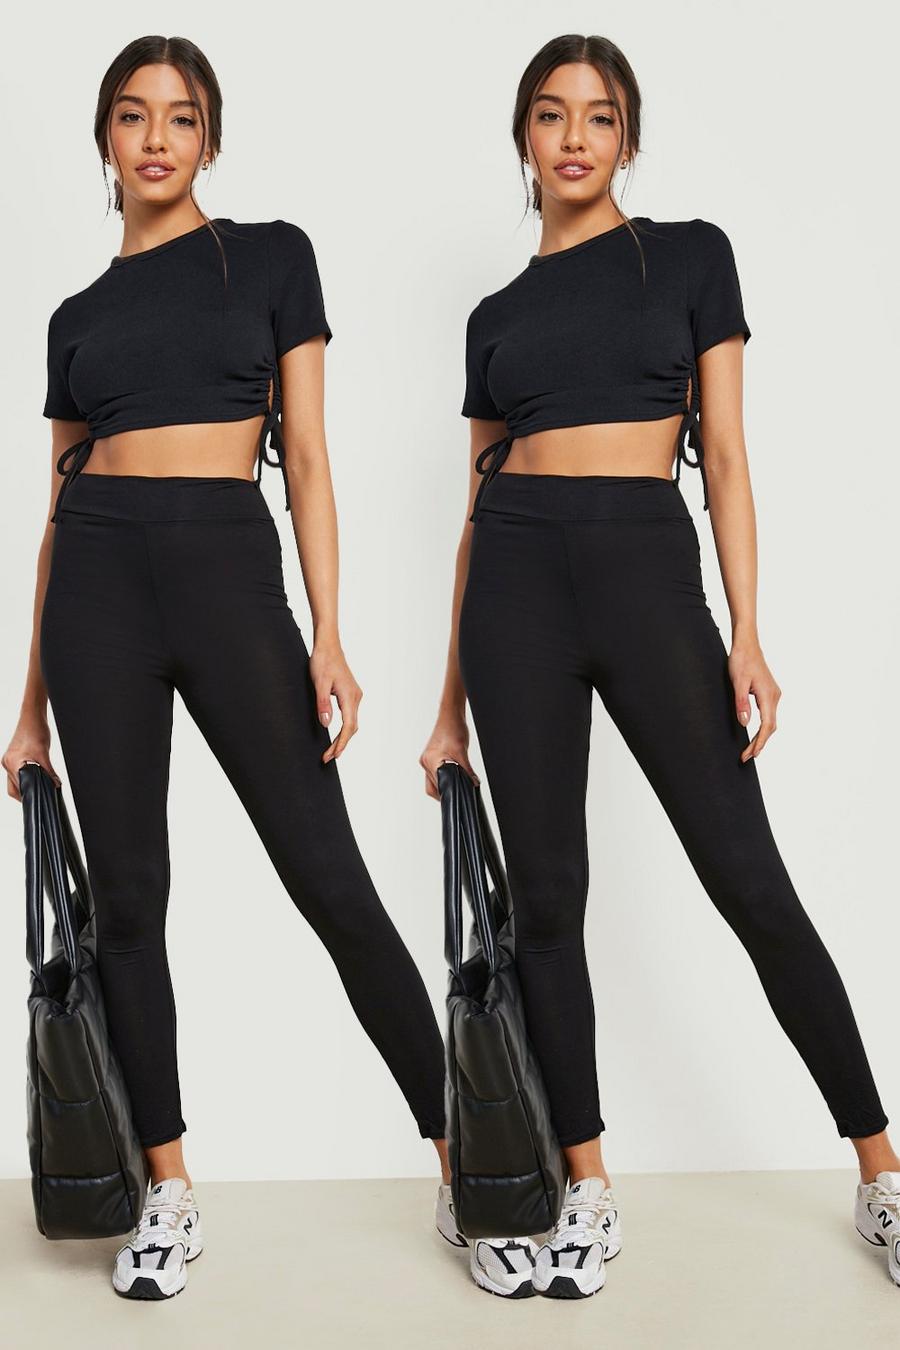 https://media.boohoo.com/i/boohoo/fzz60802_black_xl/female-black-basics-2-pack-high-waisted-core-jersey-leggings/?w=900&qlt=default&fmt.jp2.qlt=70&fmt=auto&sm=fit